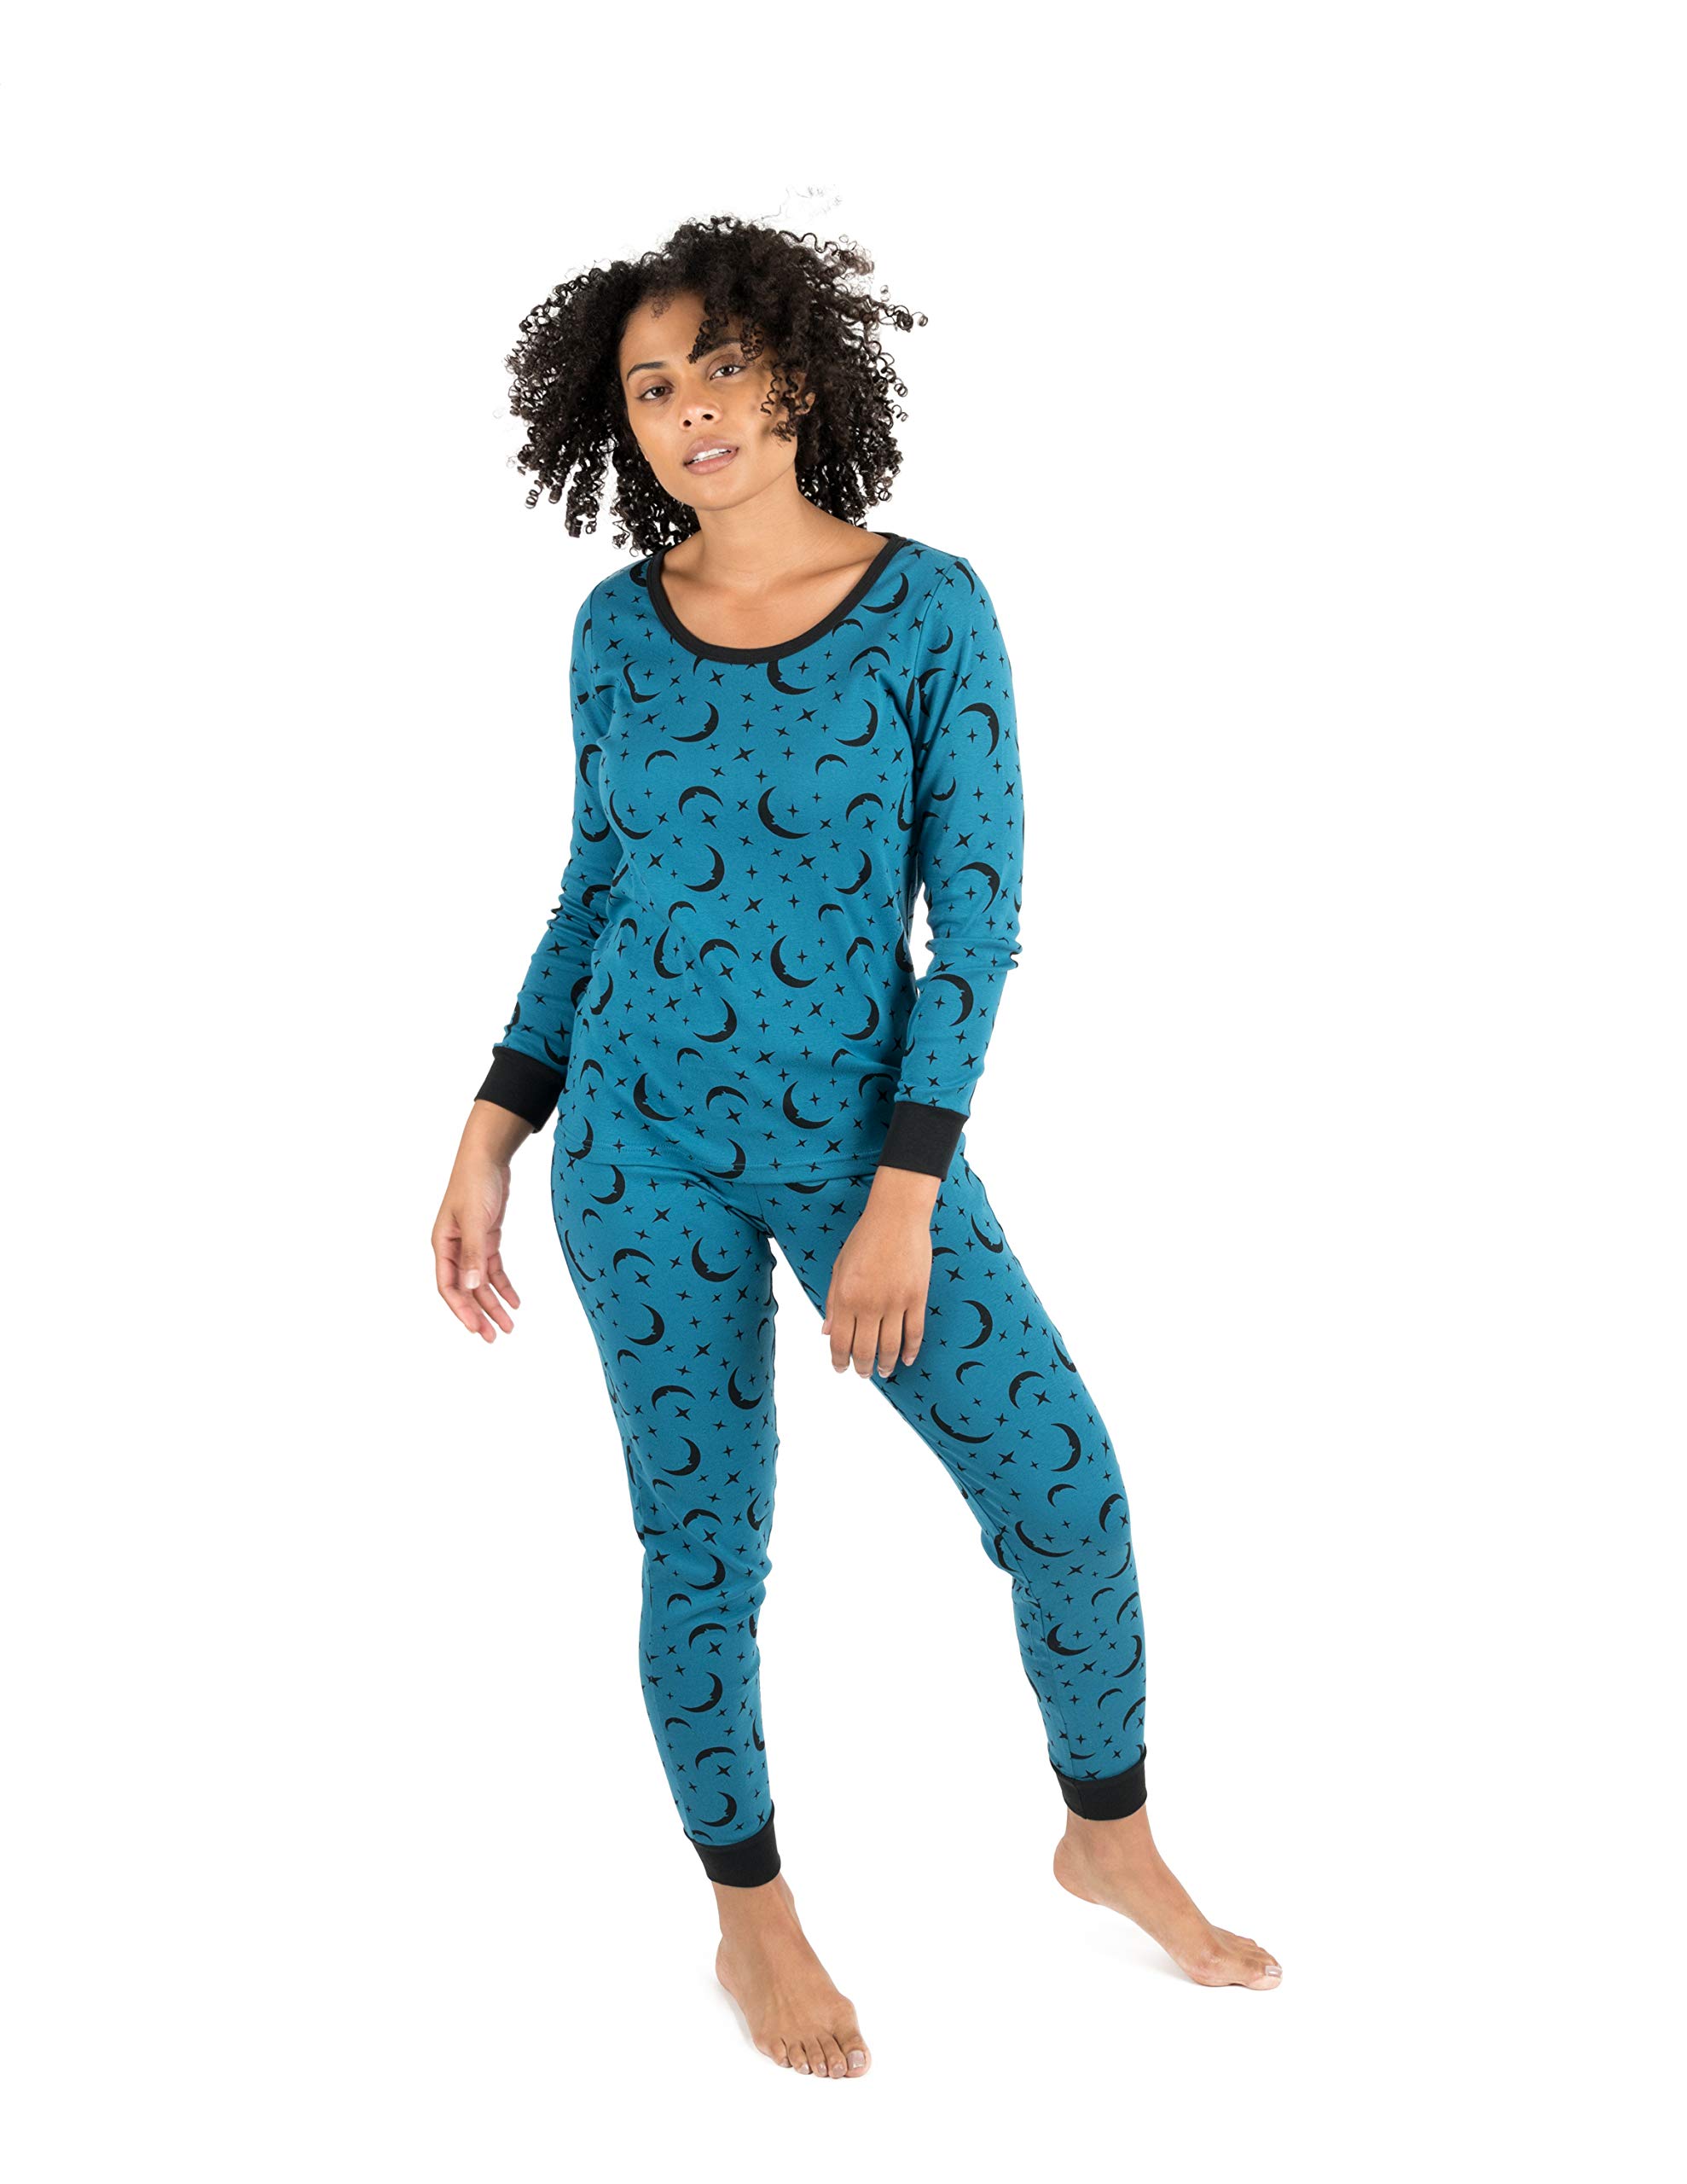 Leveret Women's Pajamas Fitted Printed Owl 2 Piece Pjs Set 100% Cotton Sleep | eBay